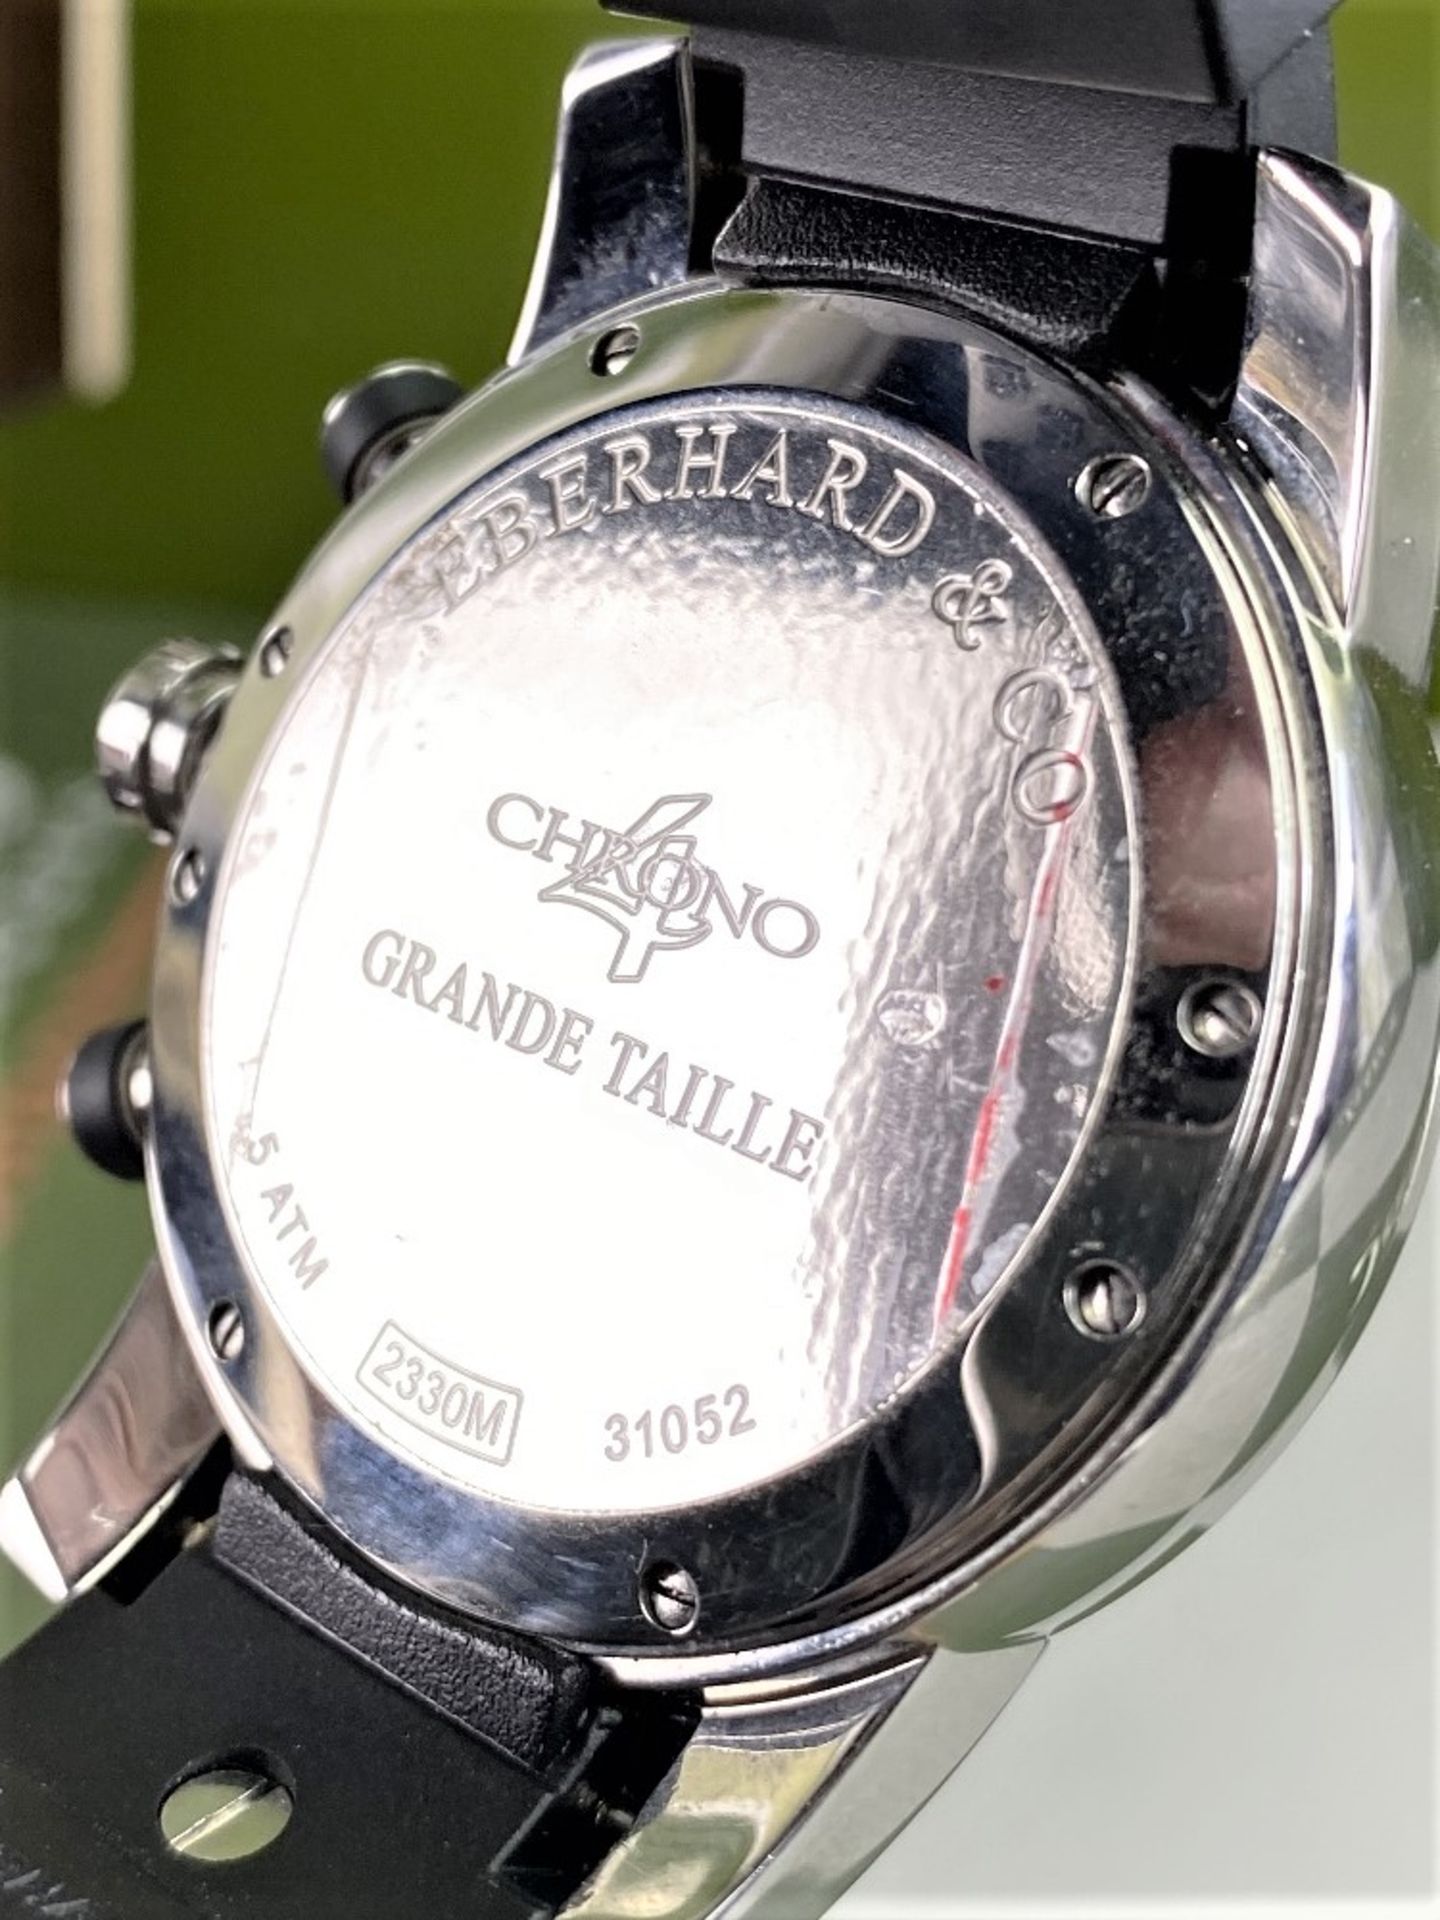 Eberhard & Co Chrono 4 Grande 43mm Watch-Ex Display - Image 4 of 10